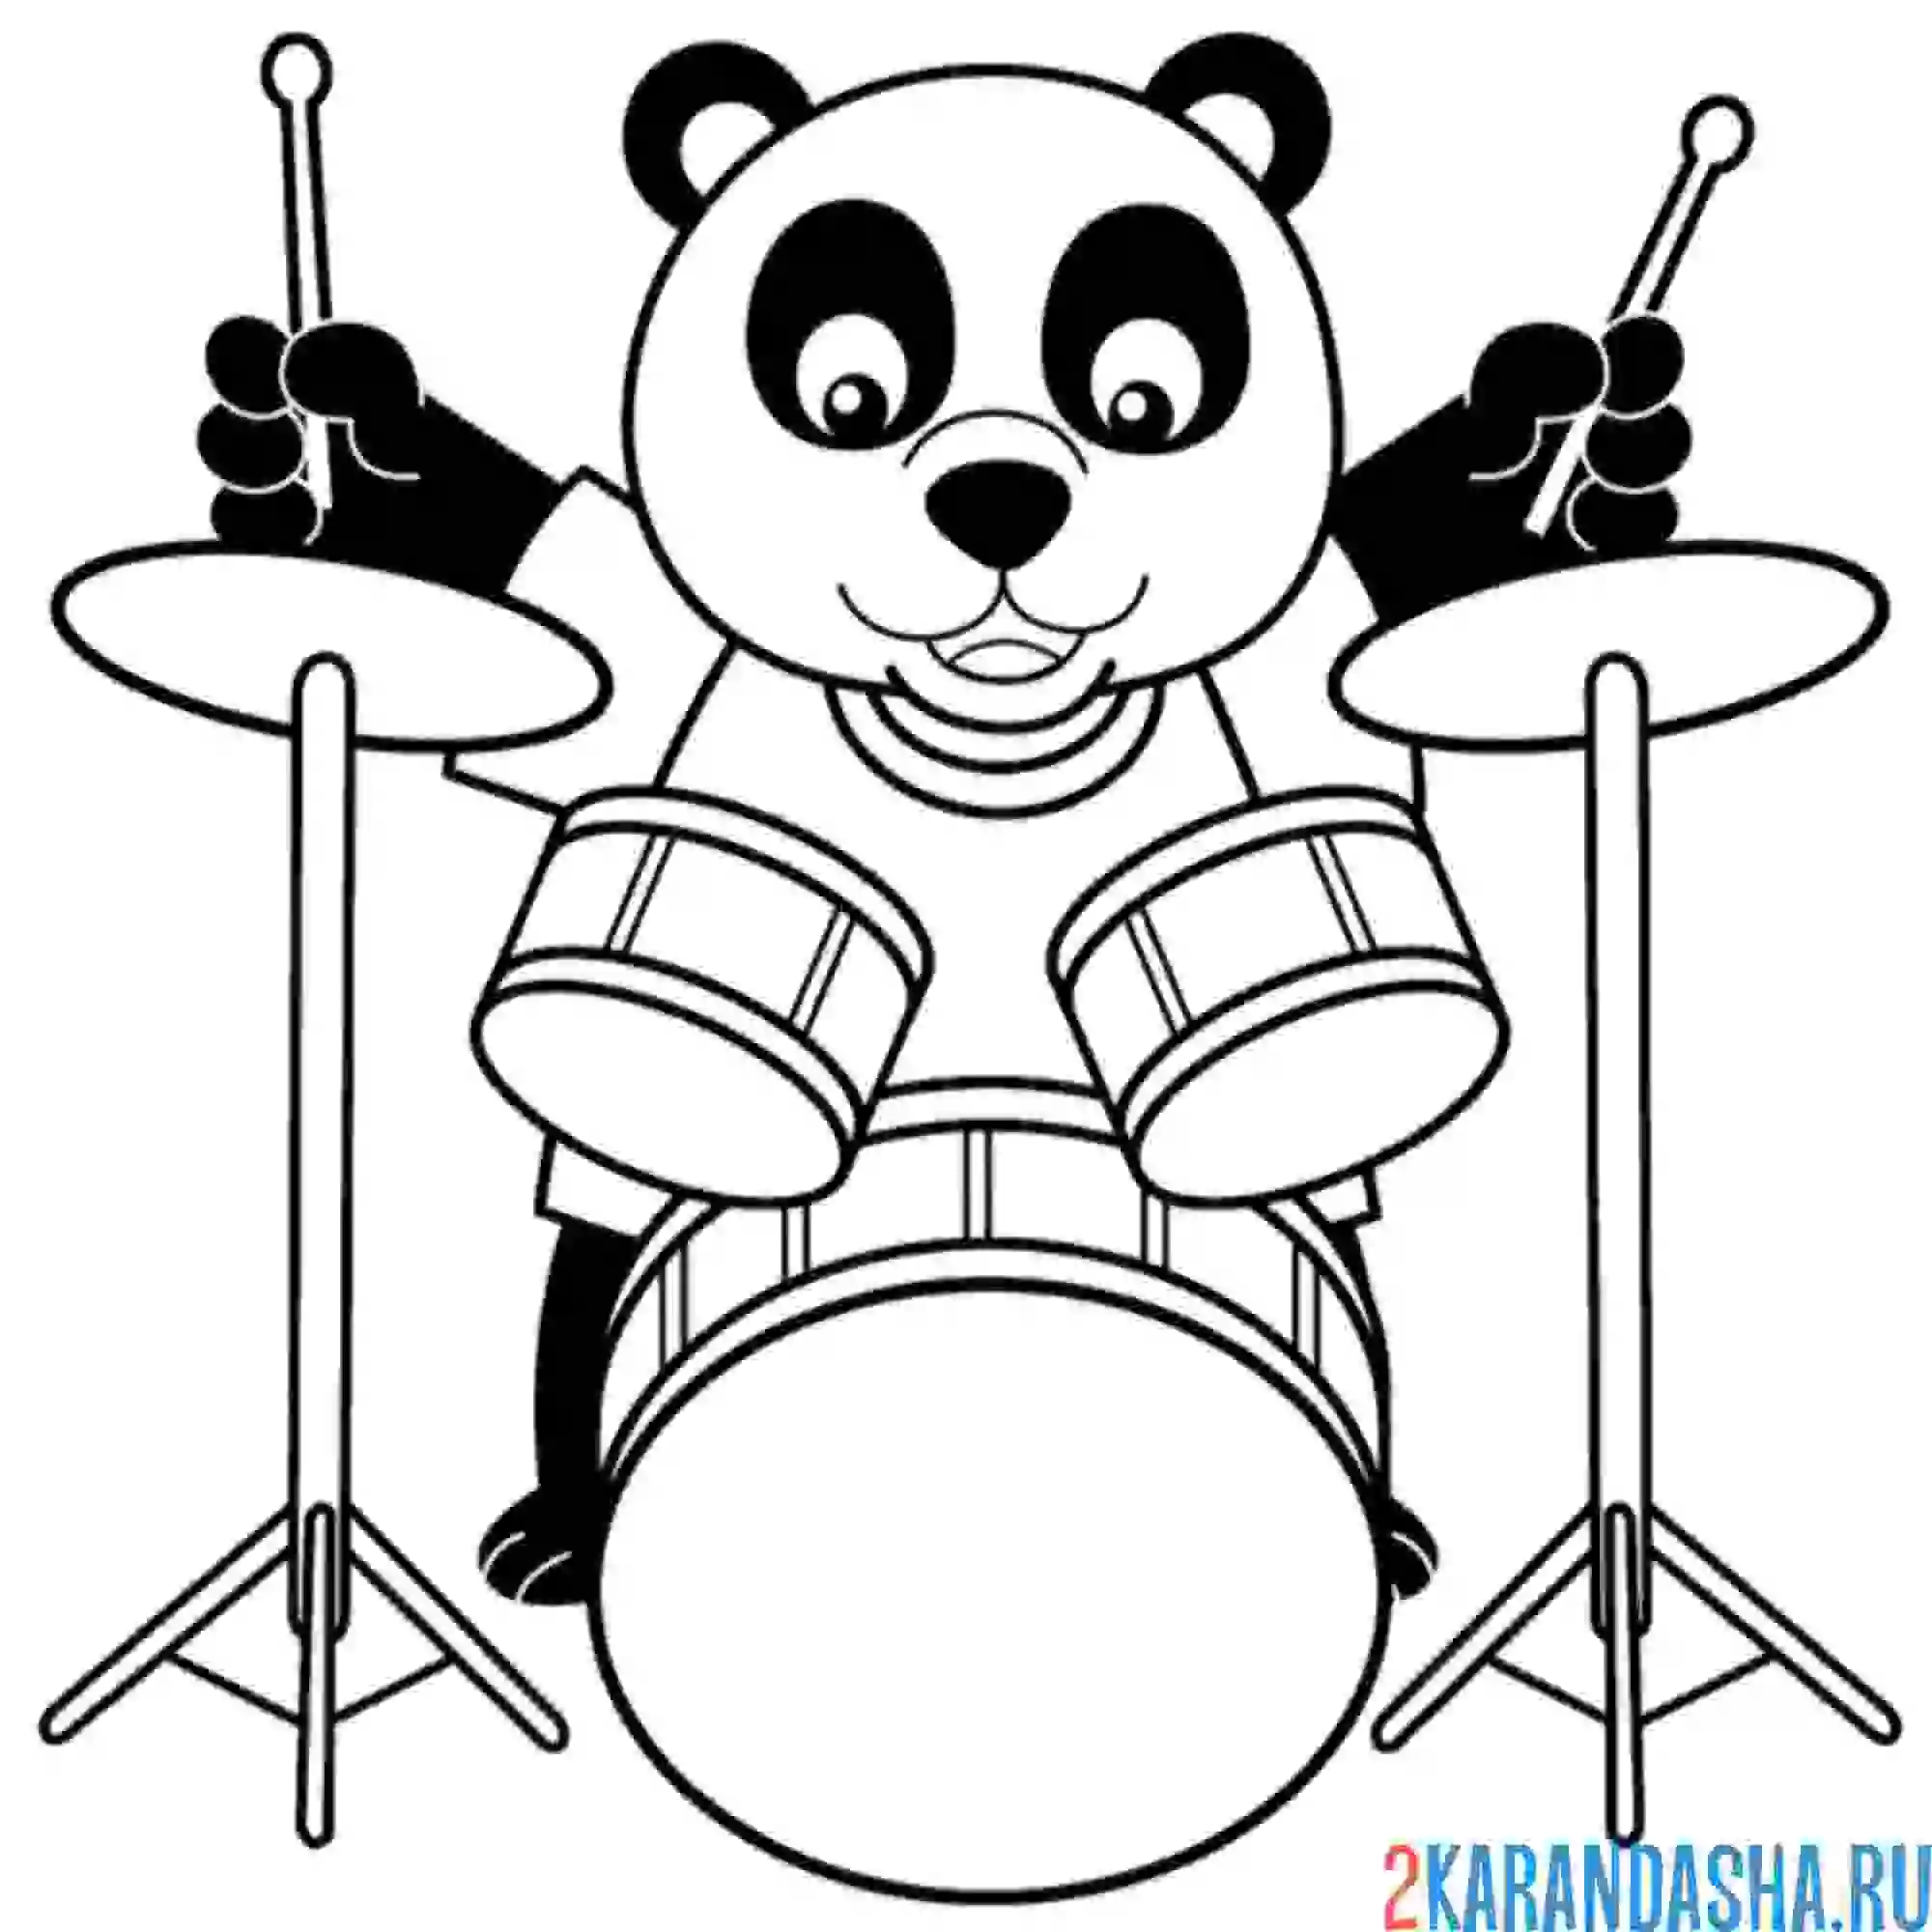 Раскраска панда барабанщик